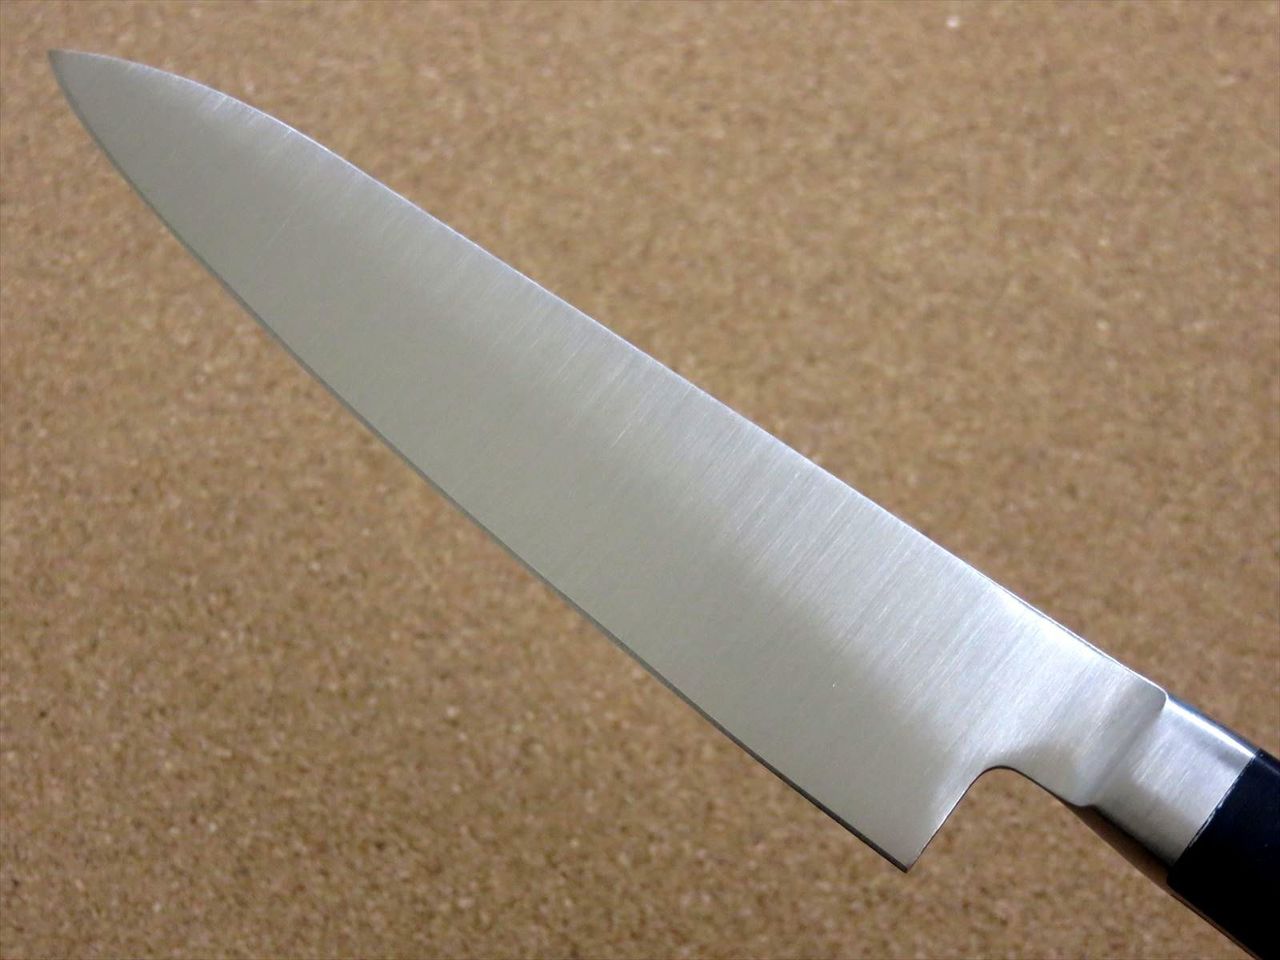 Japanese Masamune Kitchen Petty Utility Knife 135mm 5.3 inch Bolster SEKI JAPAN